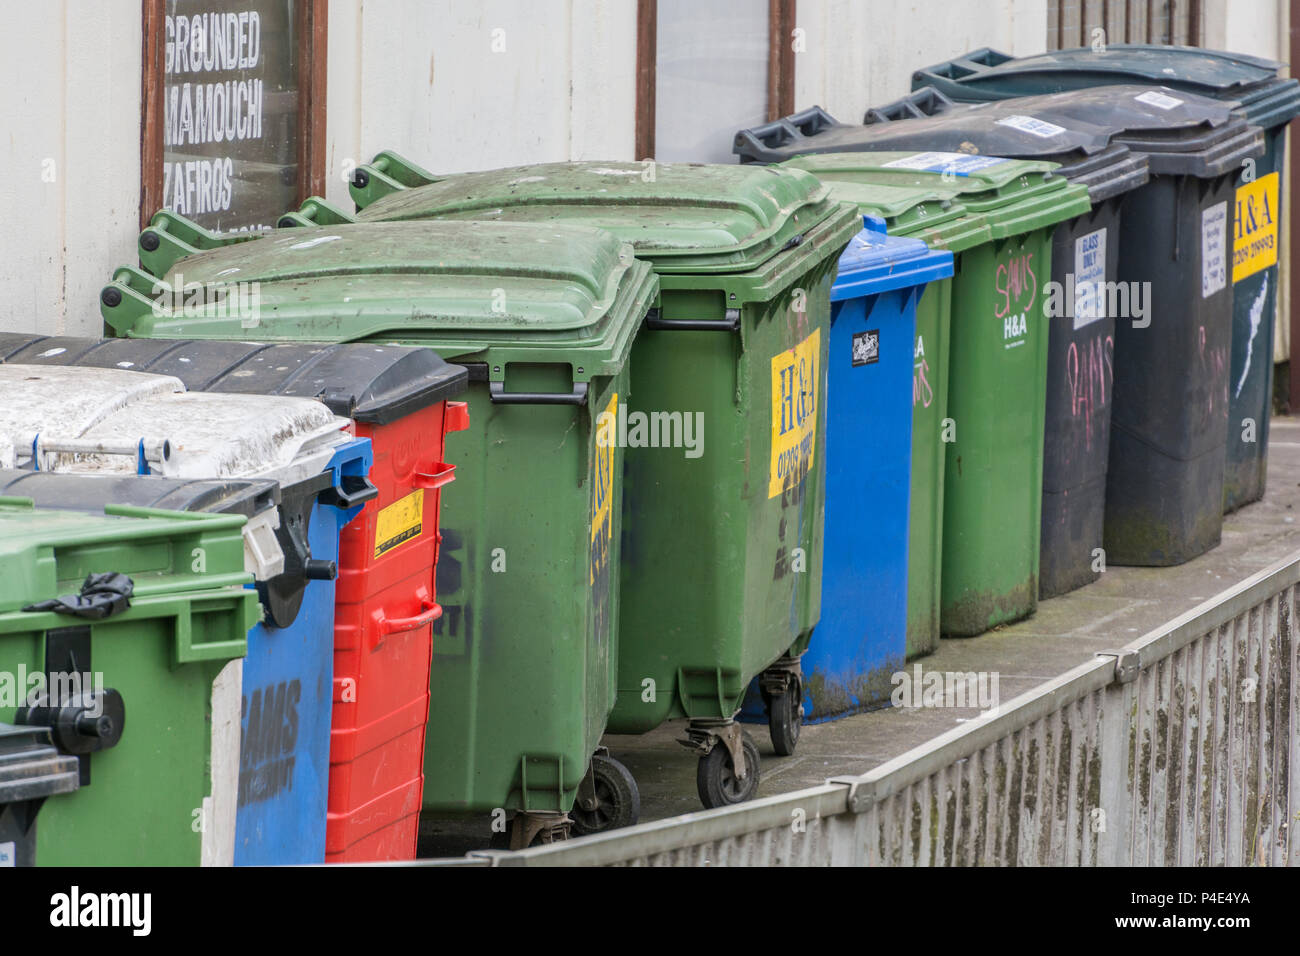 Collection of commercial wheelie bins / rubbish bins in Truro, Cornwall. Redundant data metaphor, commercial rubbish collection service. Stock Photo